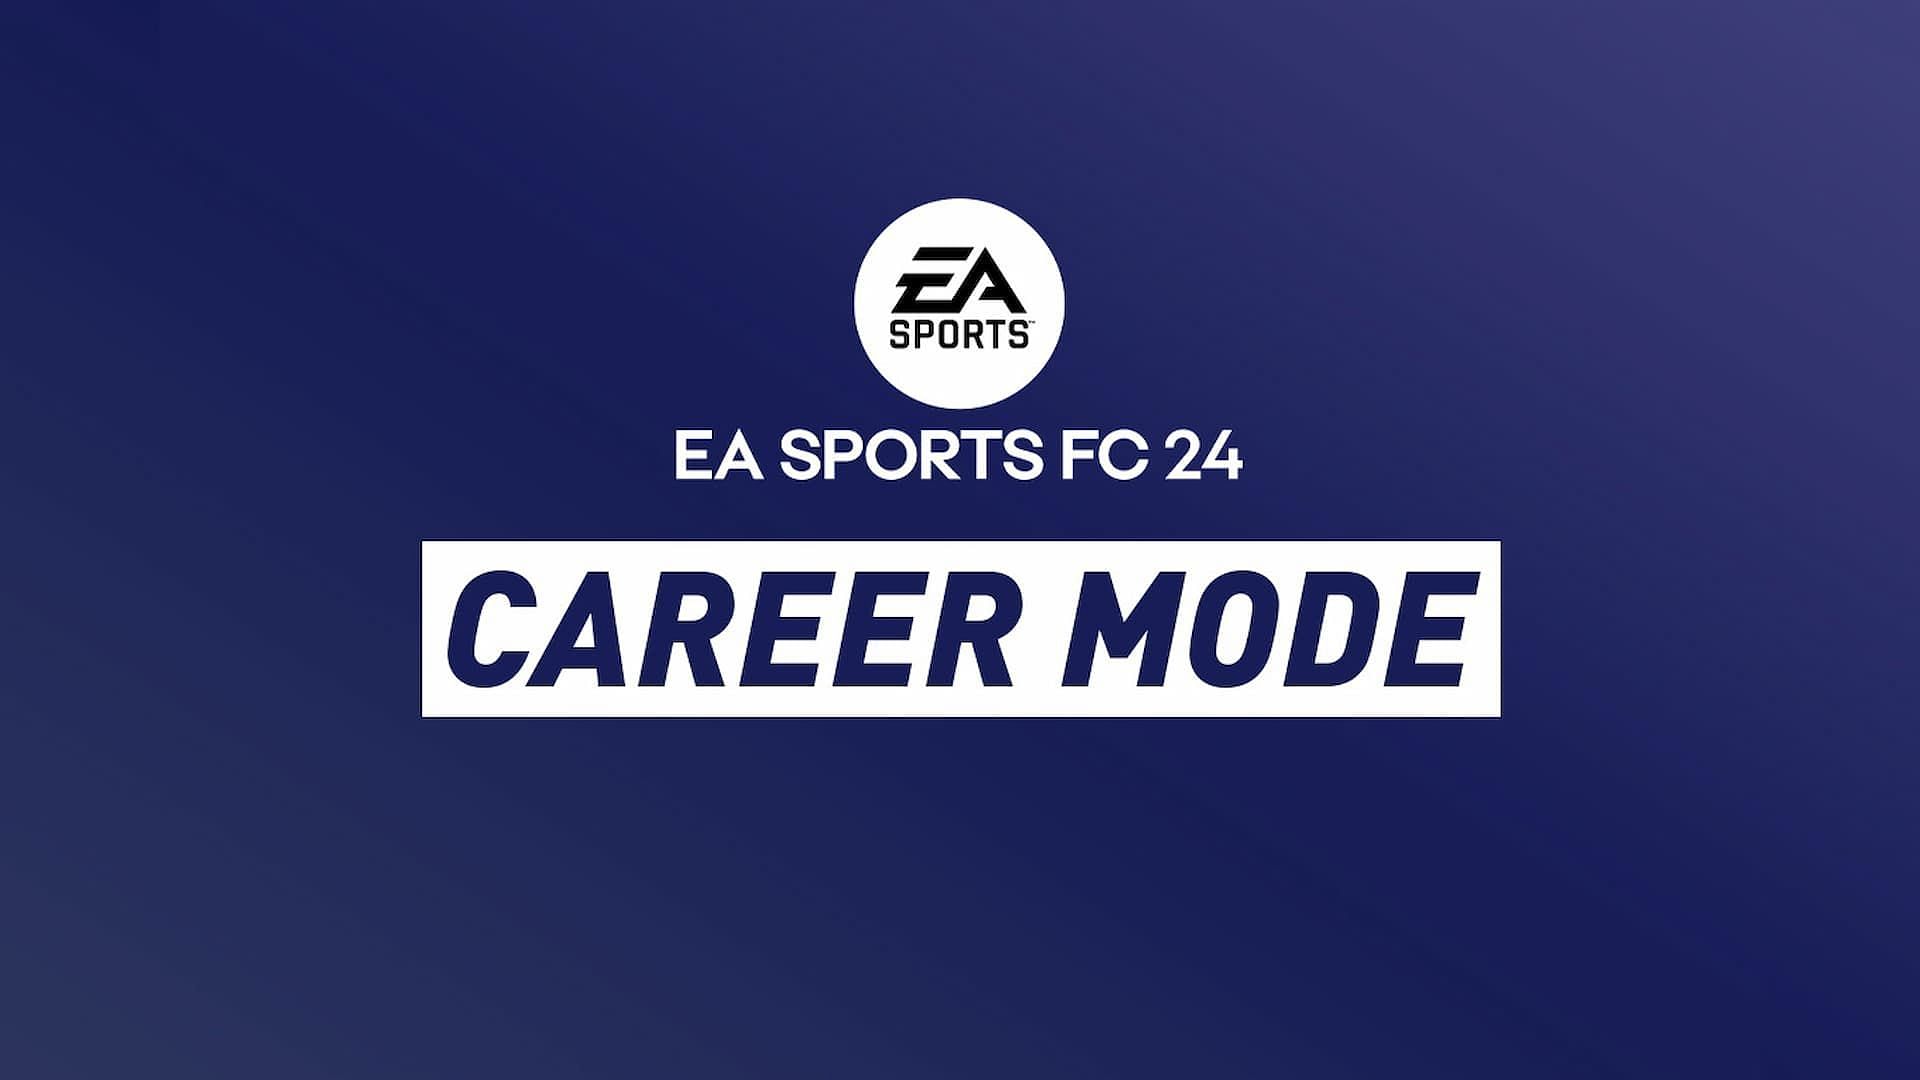 Career Mode (Image via EA Sports)